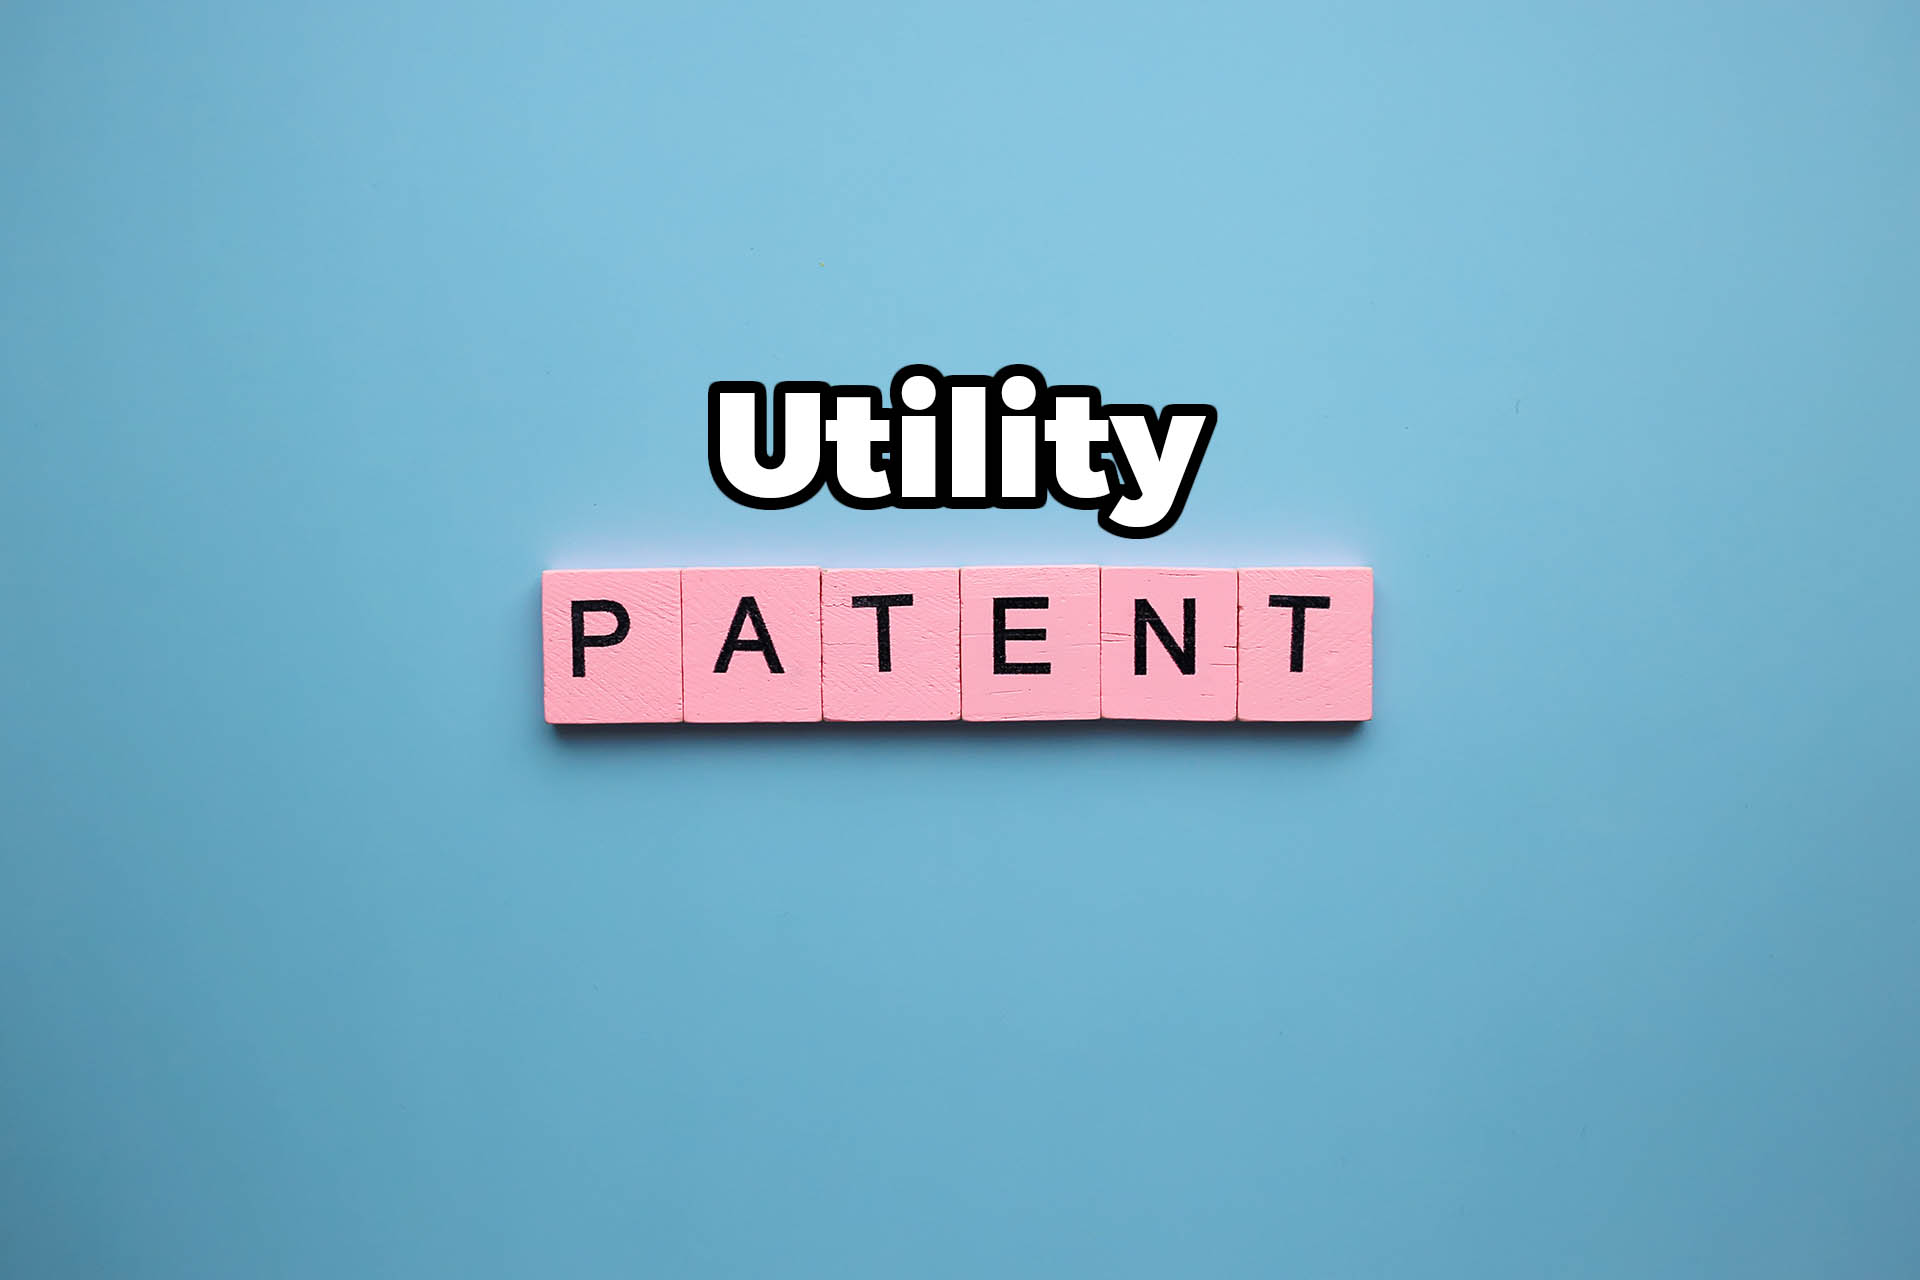 utility-patent